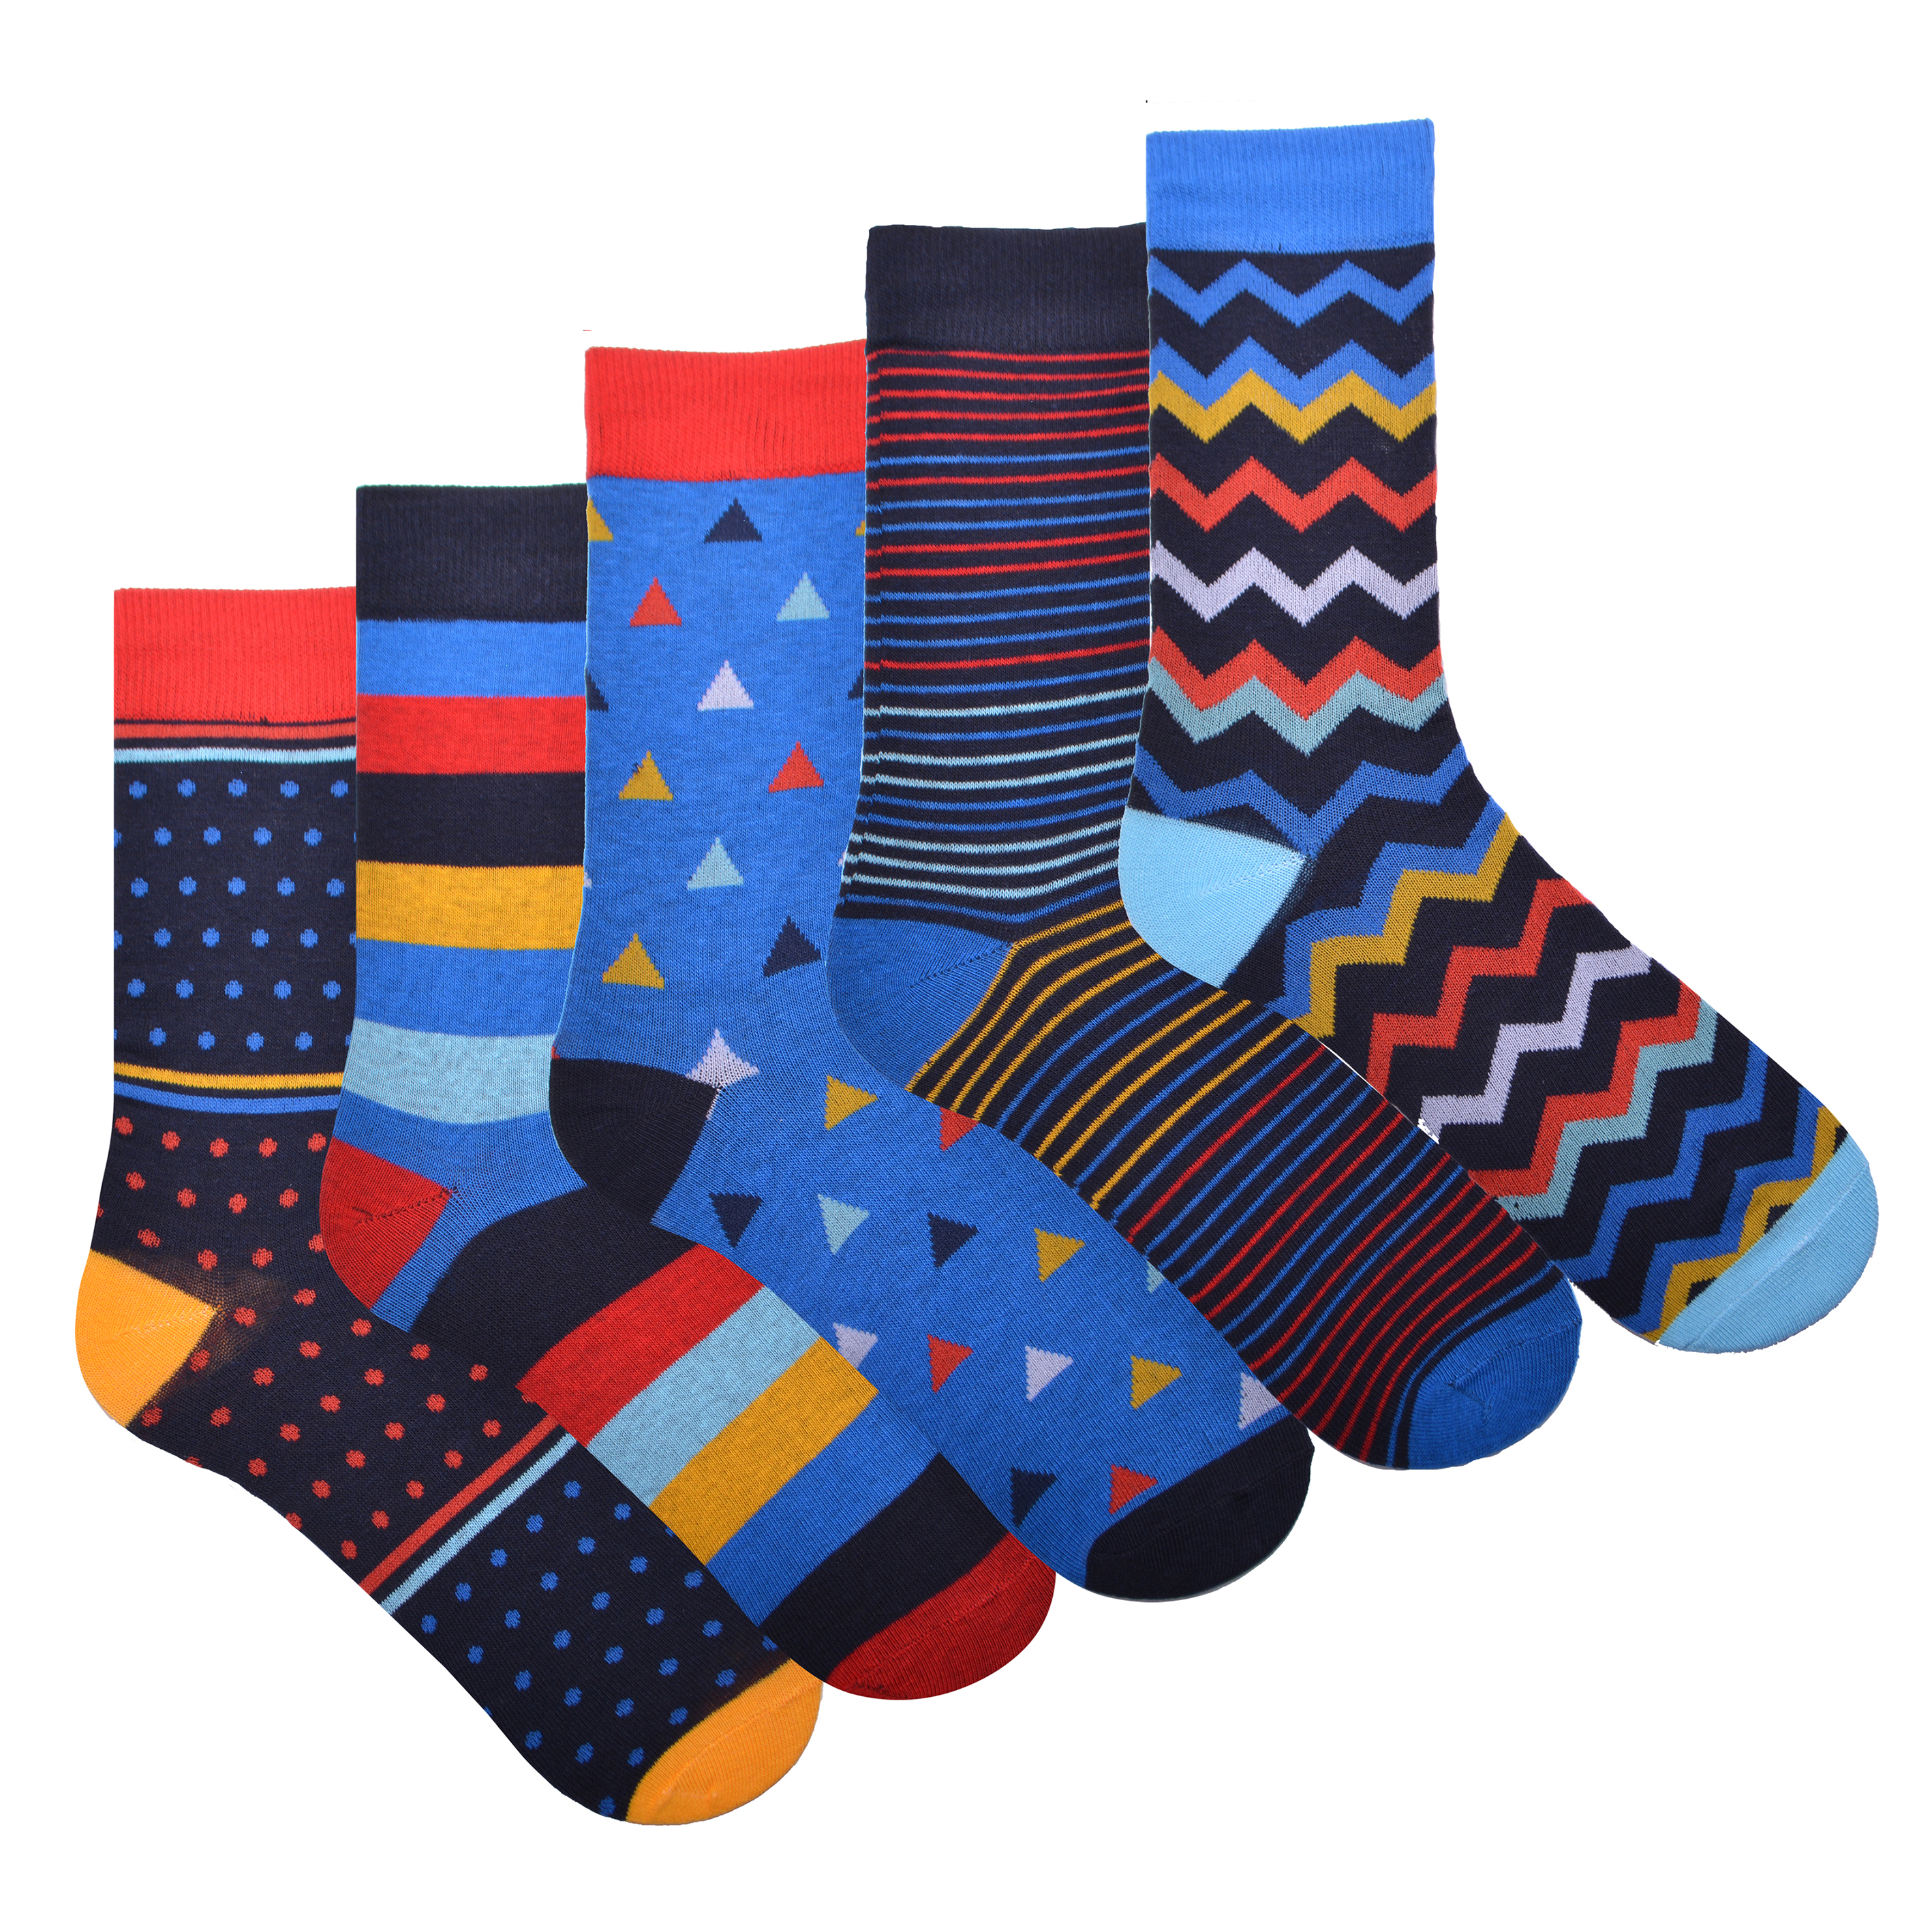 Socks n Socks-Mens 5pair Luxury Colorful Cotton Fun Novelty Dress Socks Gift Box 